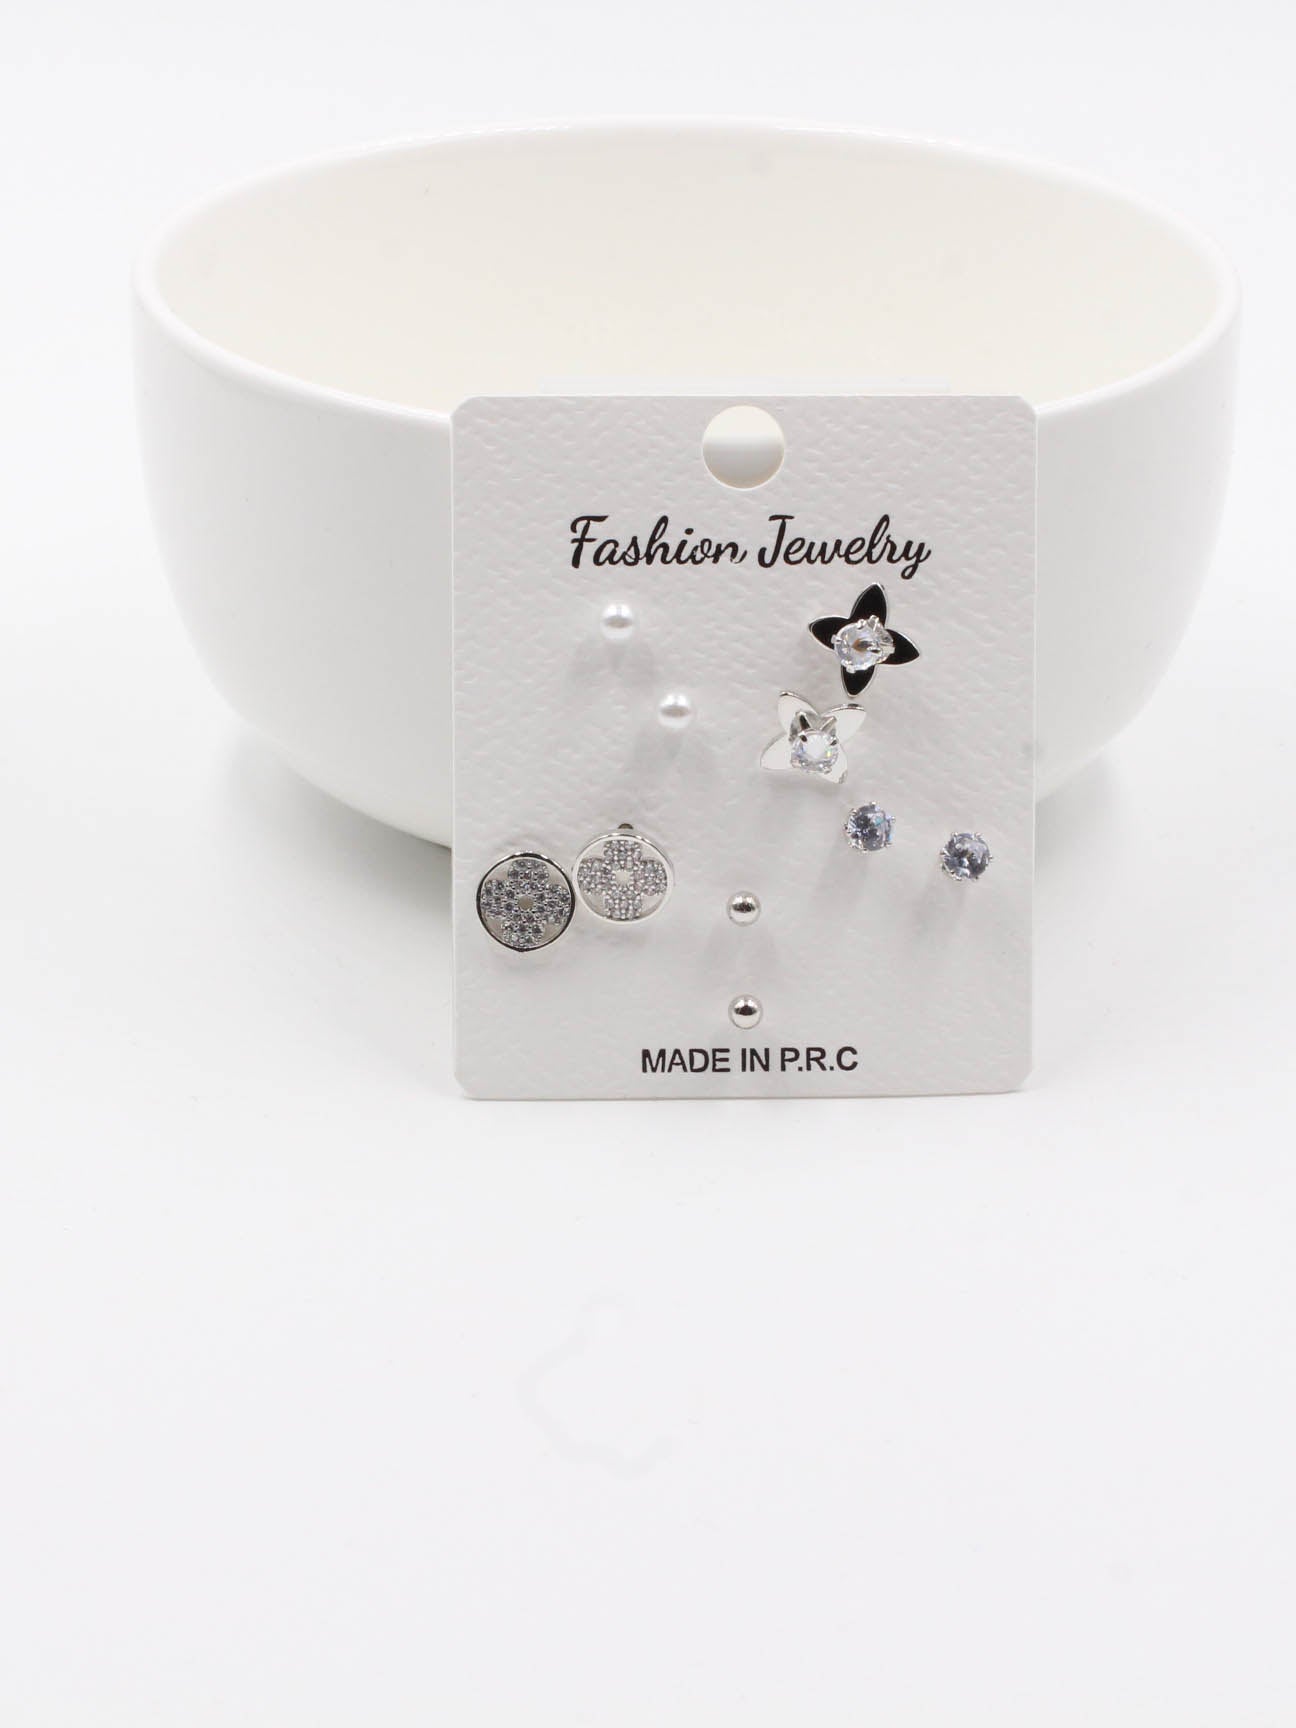 Louis Vuitton earrings collection - تشكيلة حلق لويس فيتون حلق Jewel فضي  